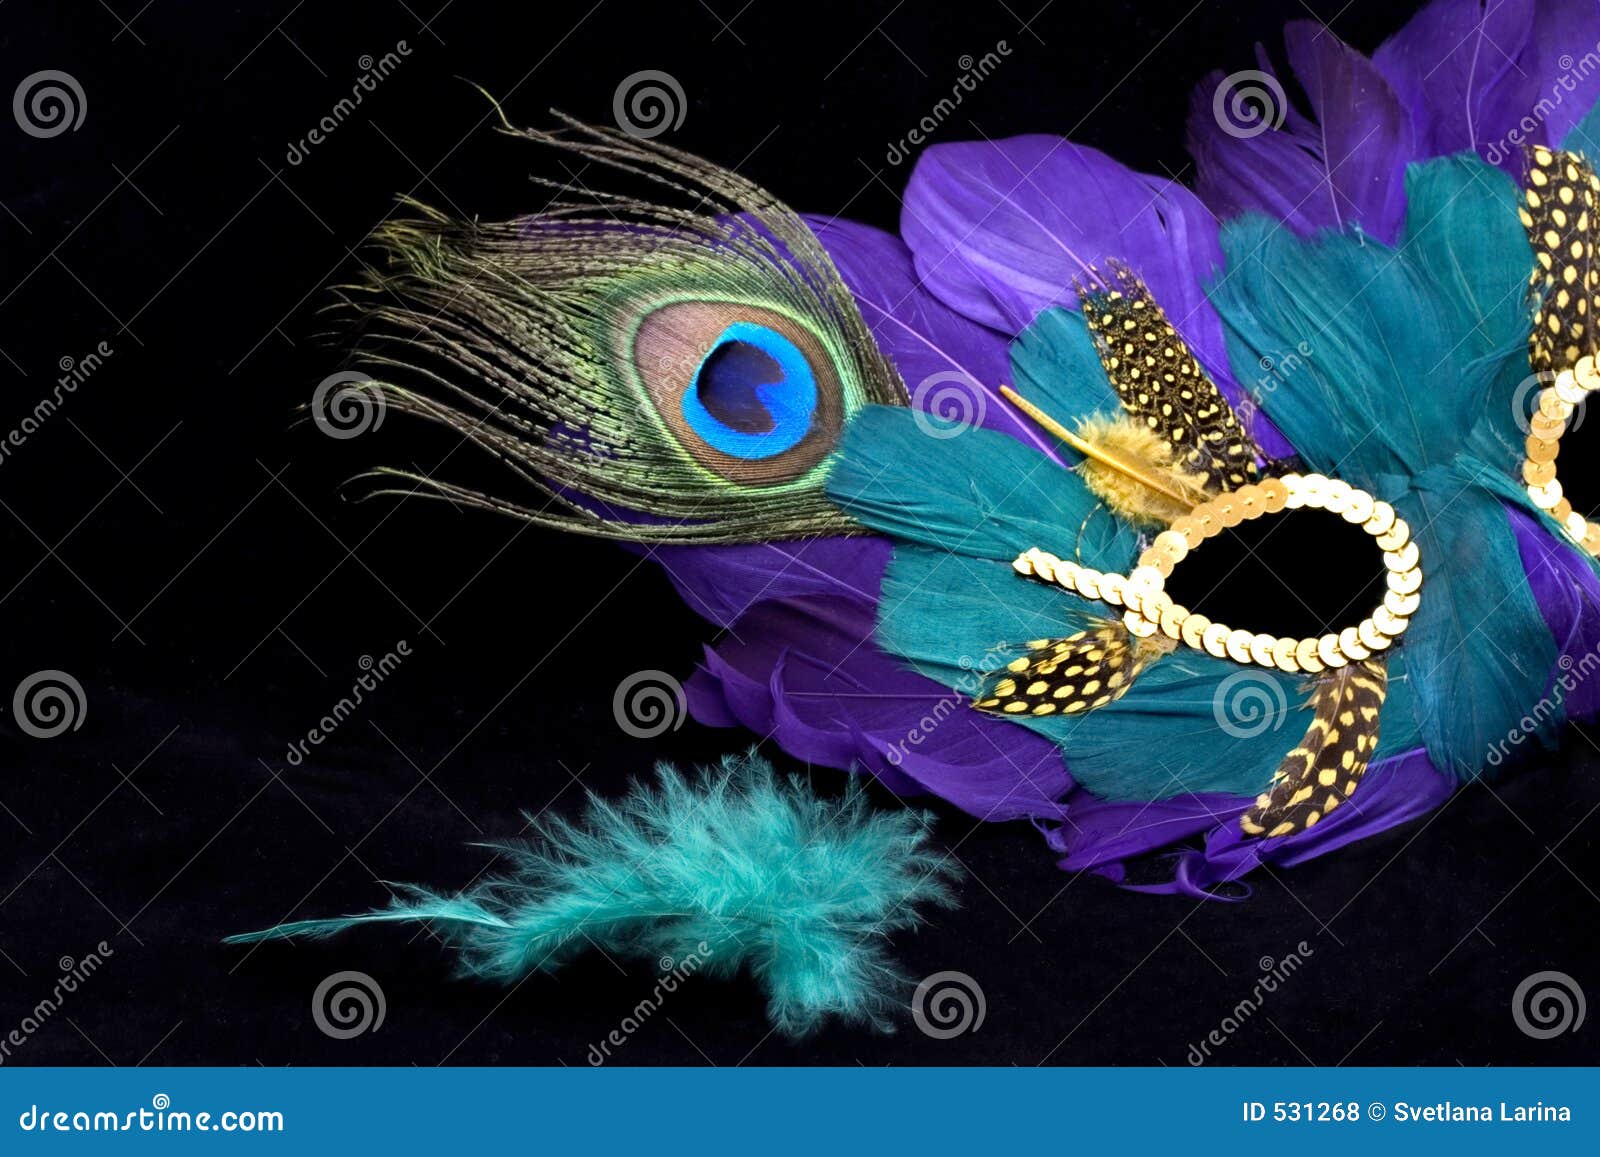 Purple Green Yellow Feather Mardi Gras Mask Owl Face